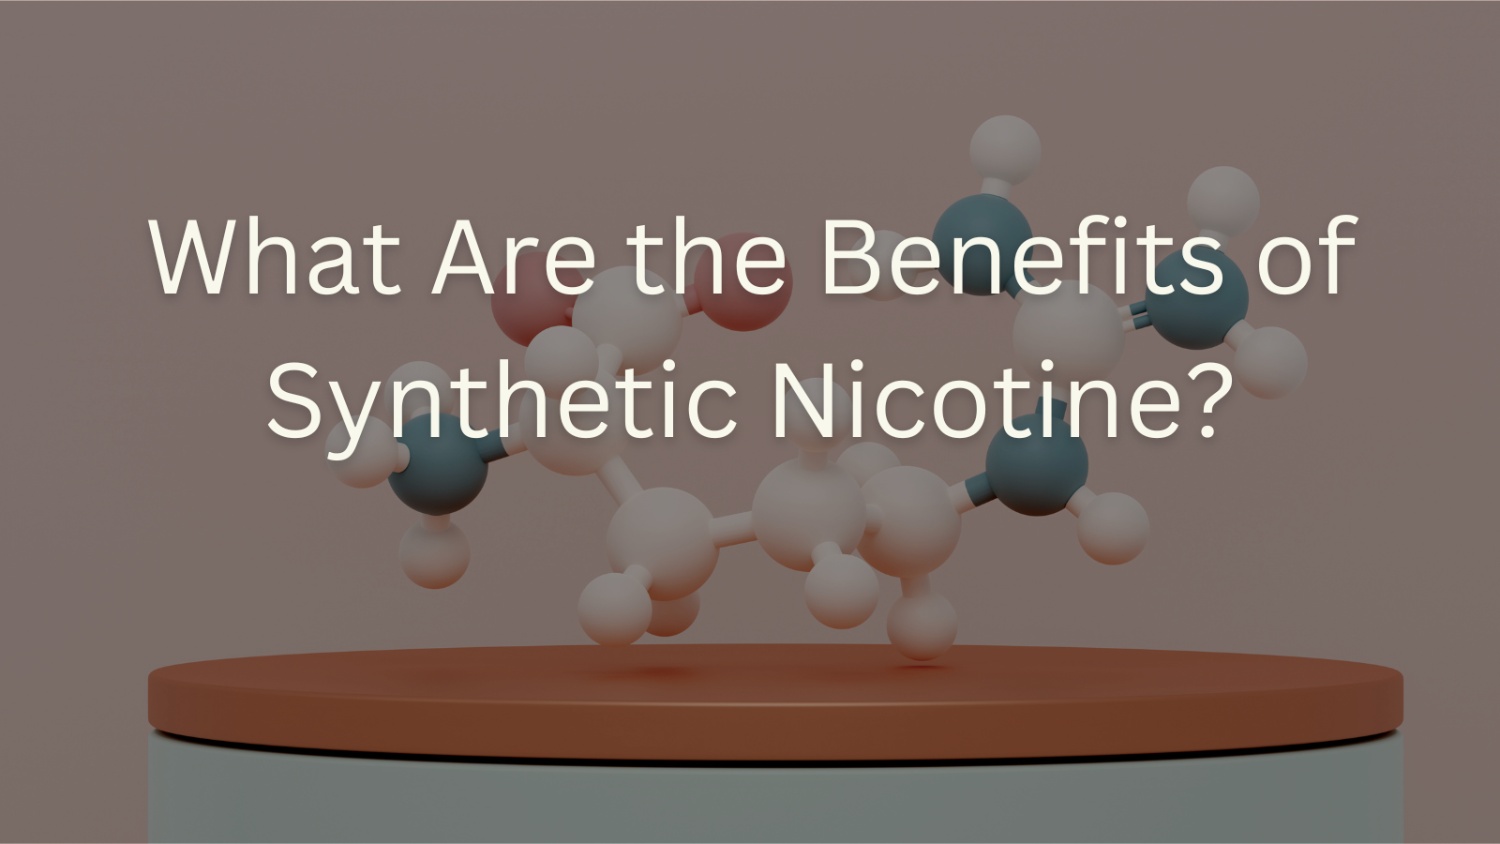 The benefits of synthetic nicotine